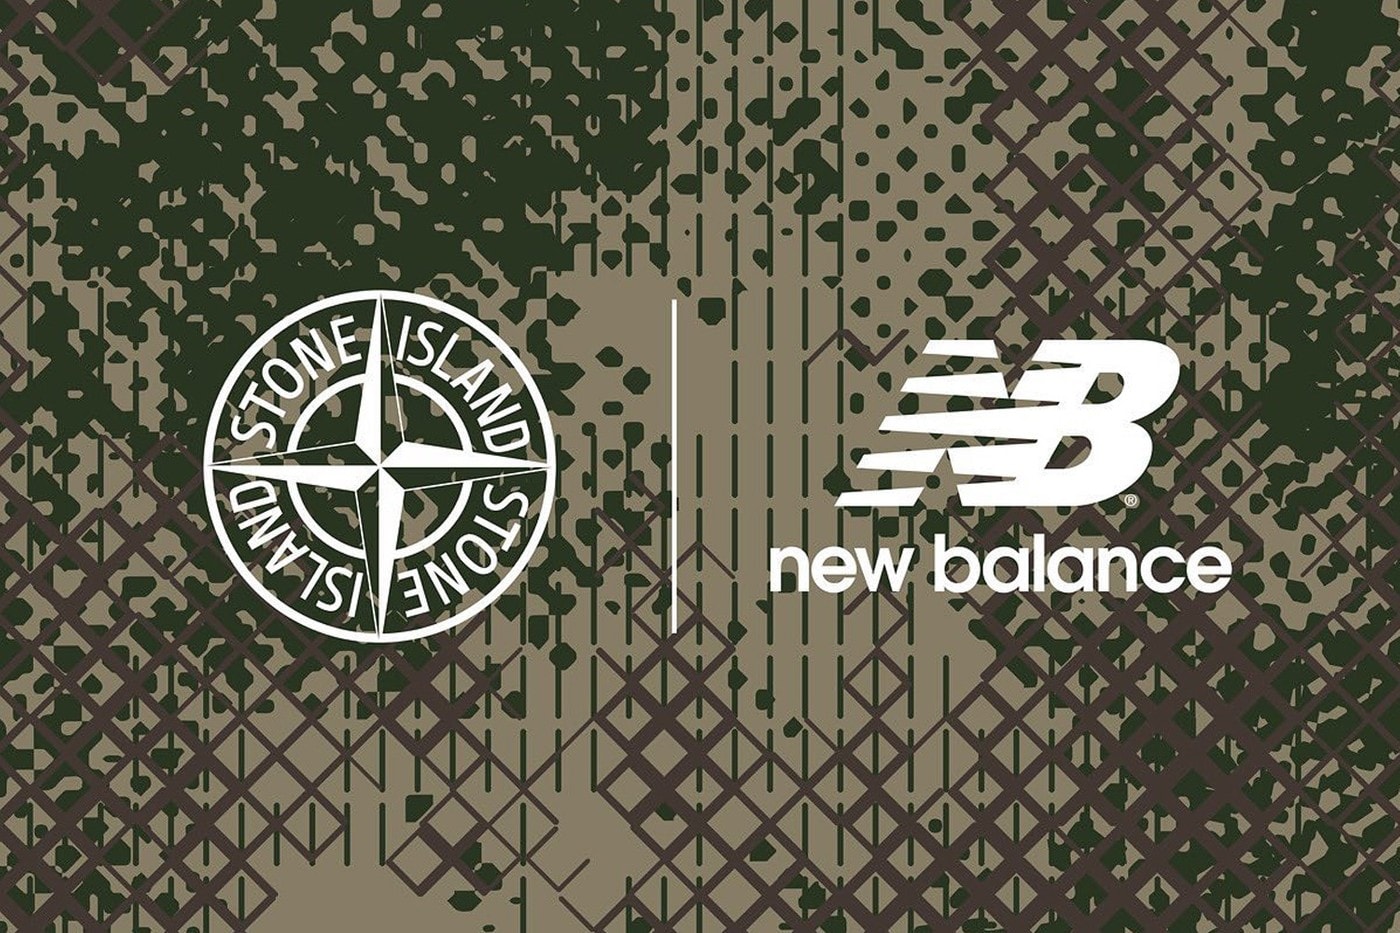 Stone Island x New Balance 最新聯名預告正式公開